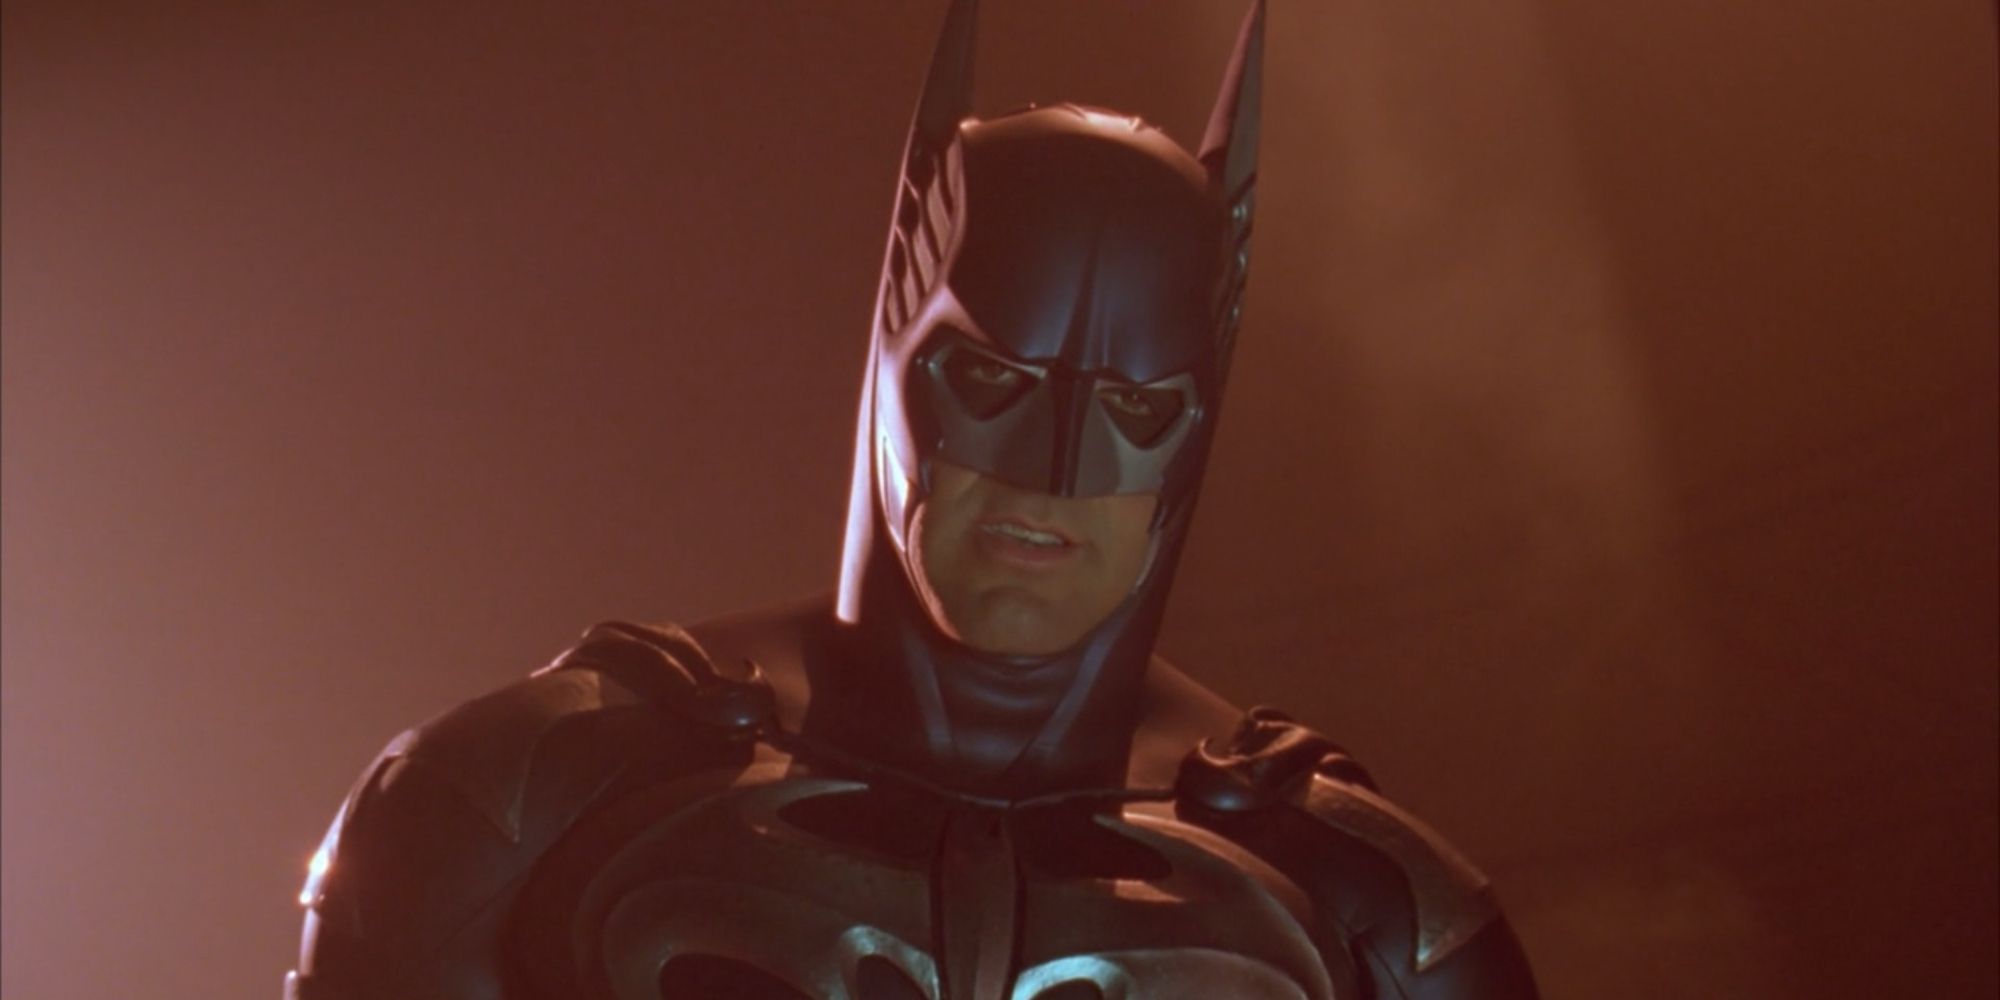 George Clooney as Batman in his Anti Freeze Batsuit in Batman And Robin